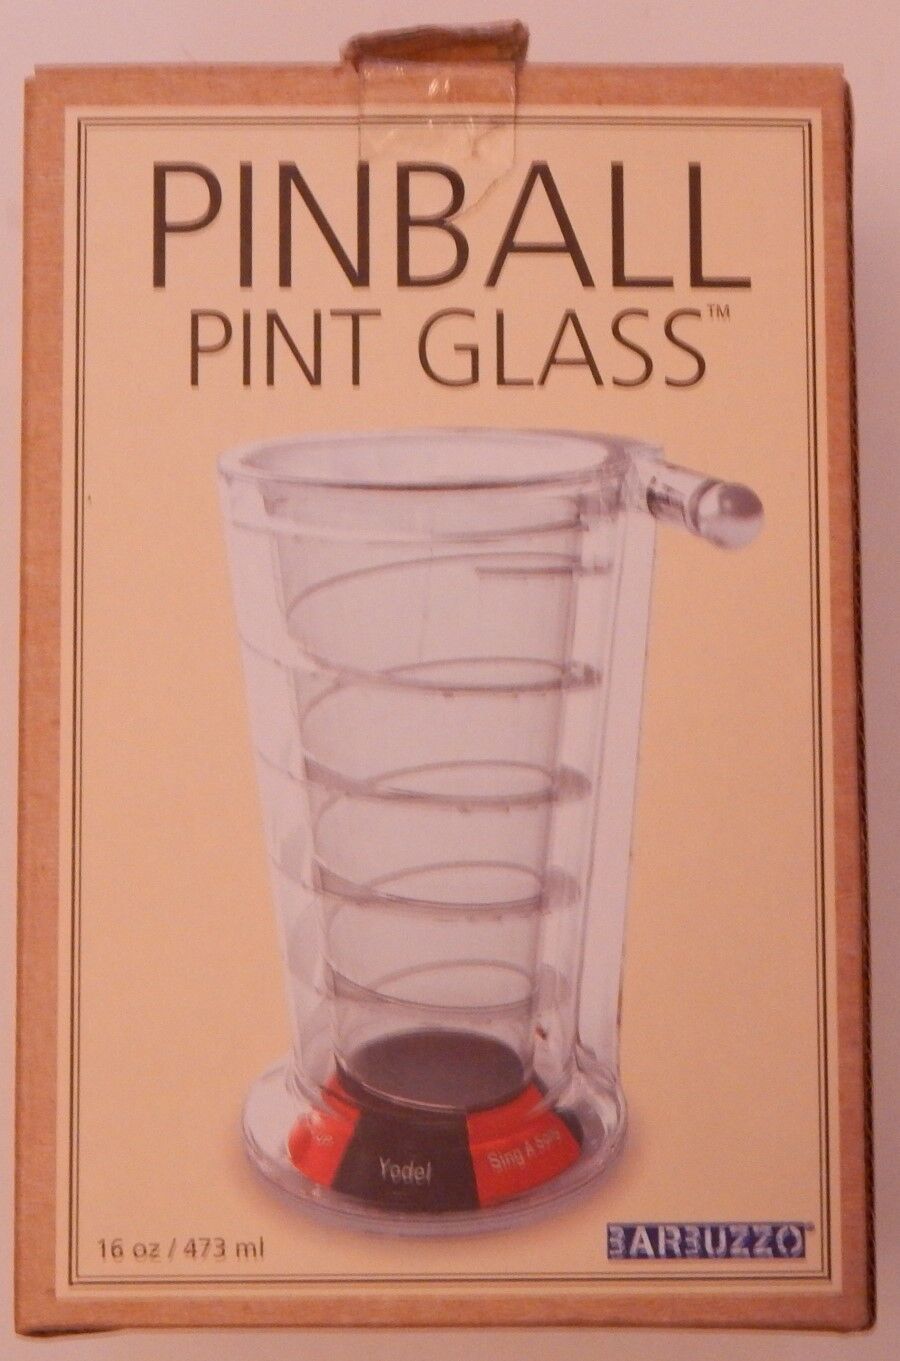 Barbuzzo Pinball Pint Glass 16 Oz in Box R12634